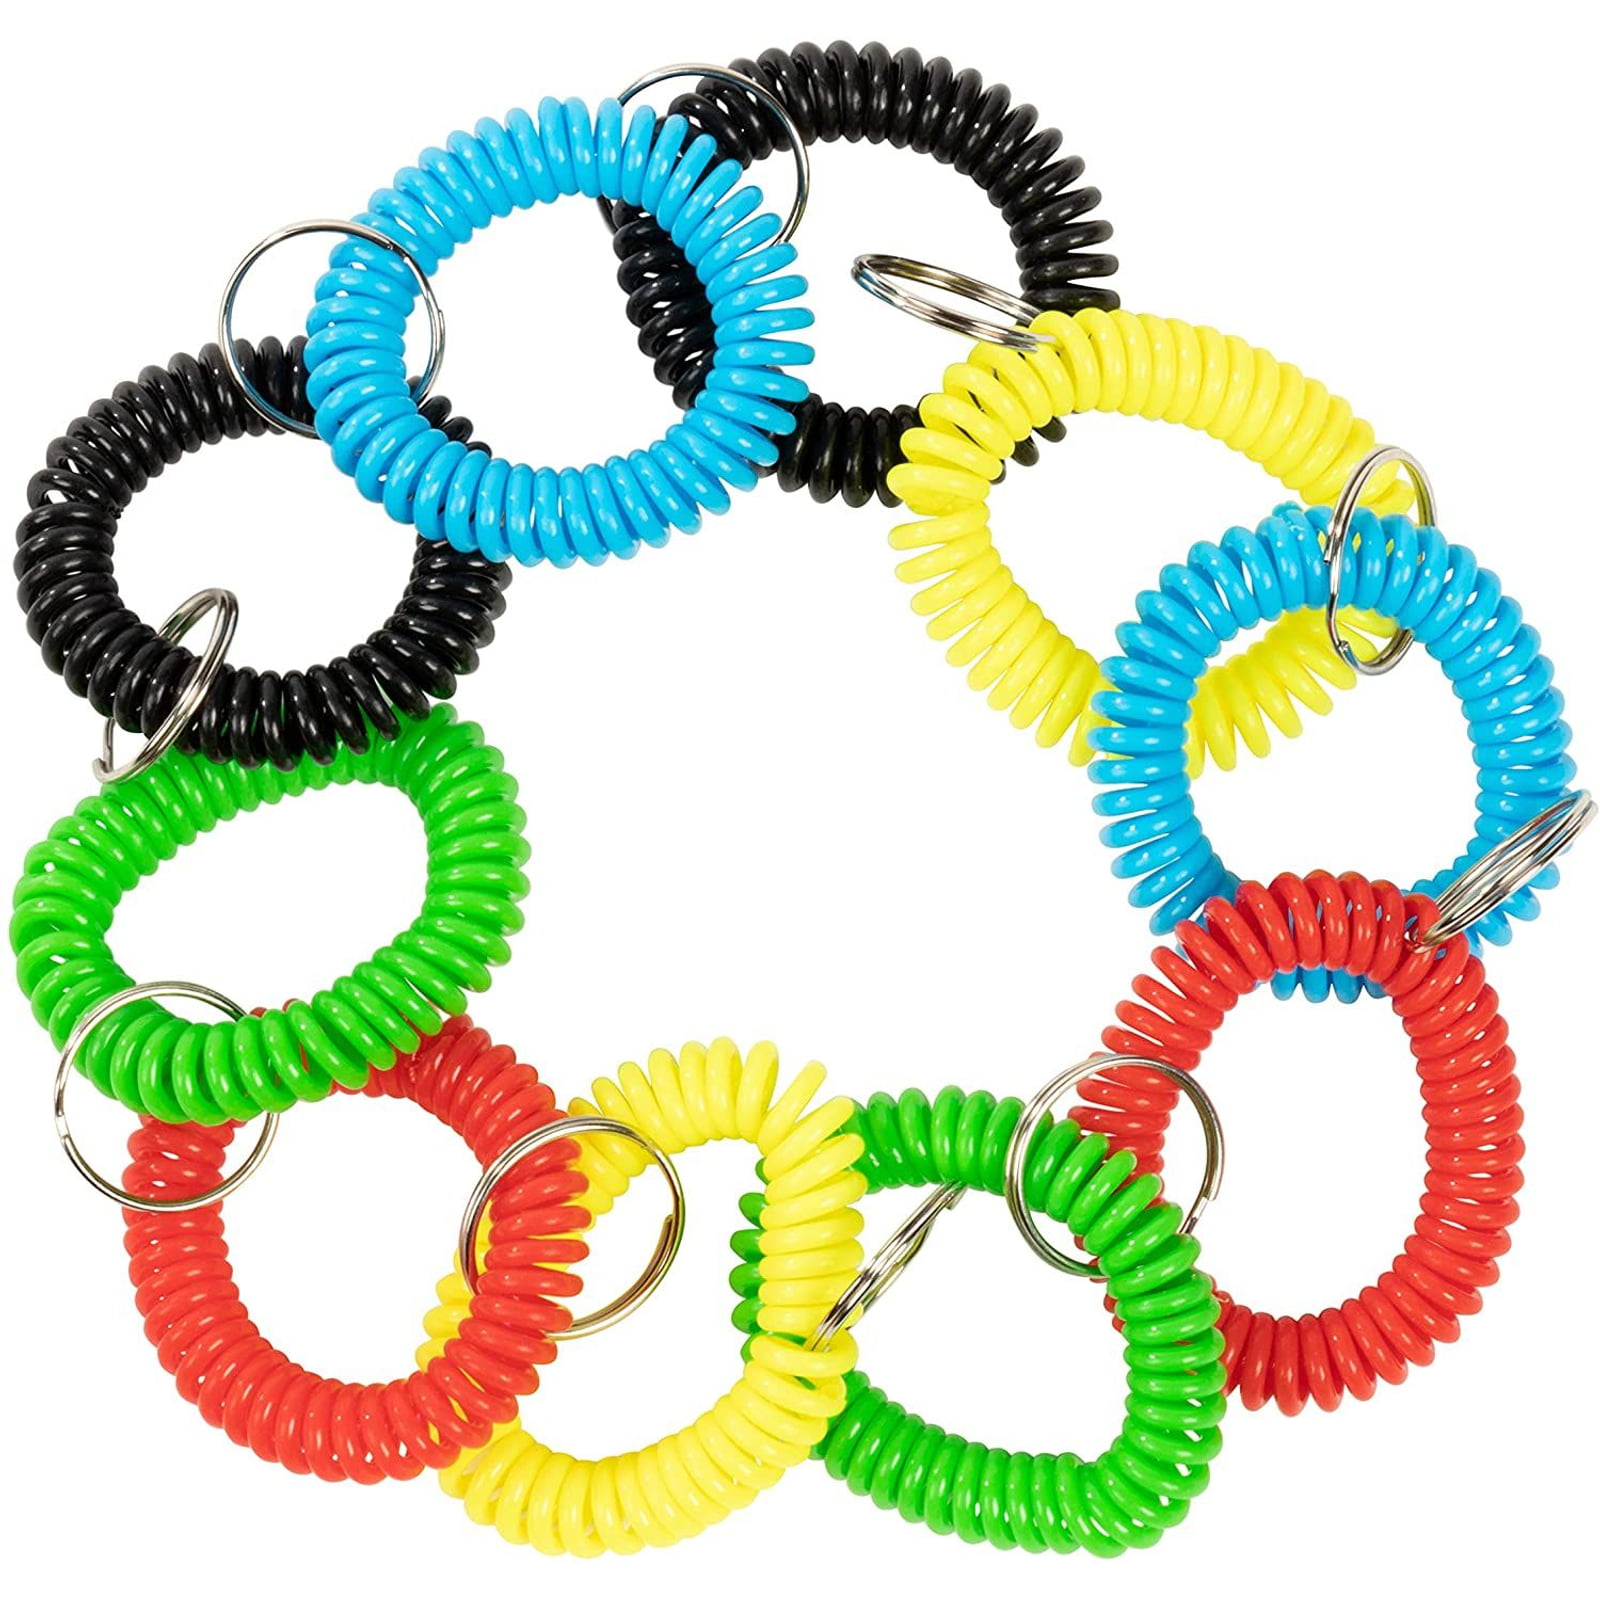 Plastic Coil Wrist Band Key Ring Stretchable Spring Bracelet Chain Keyring... 